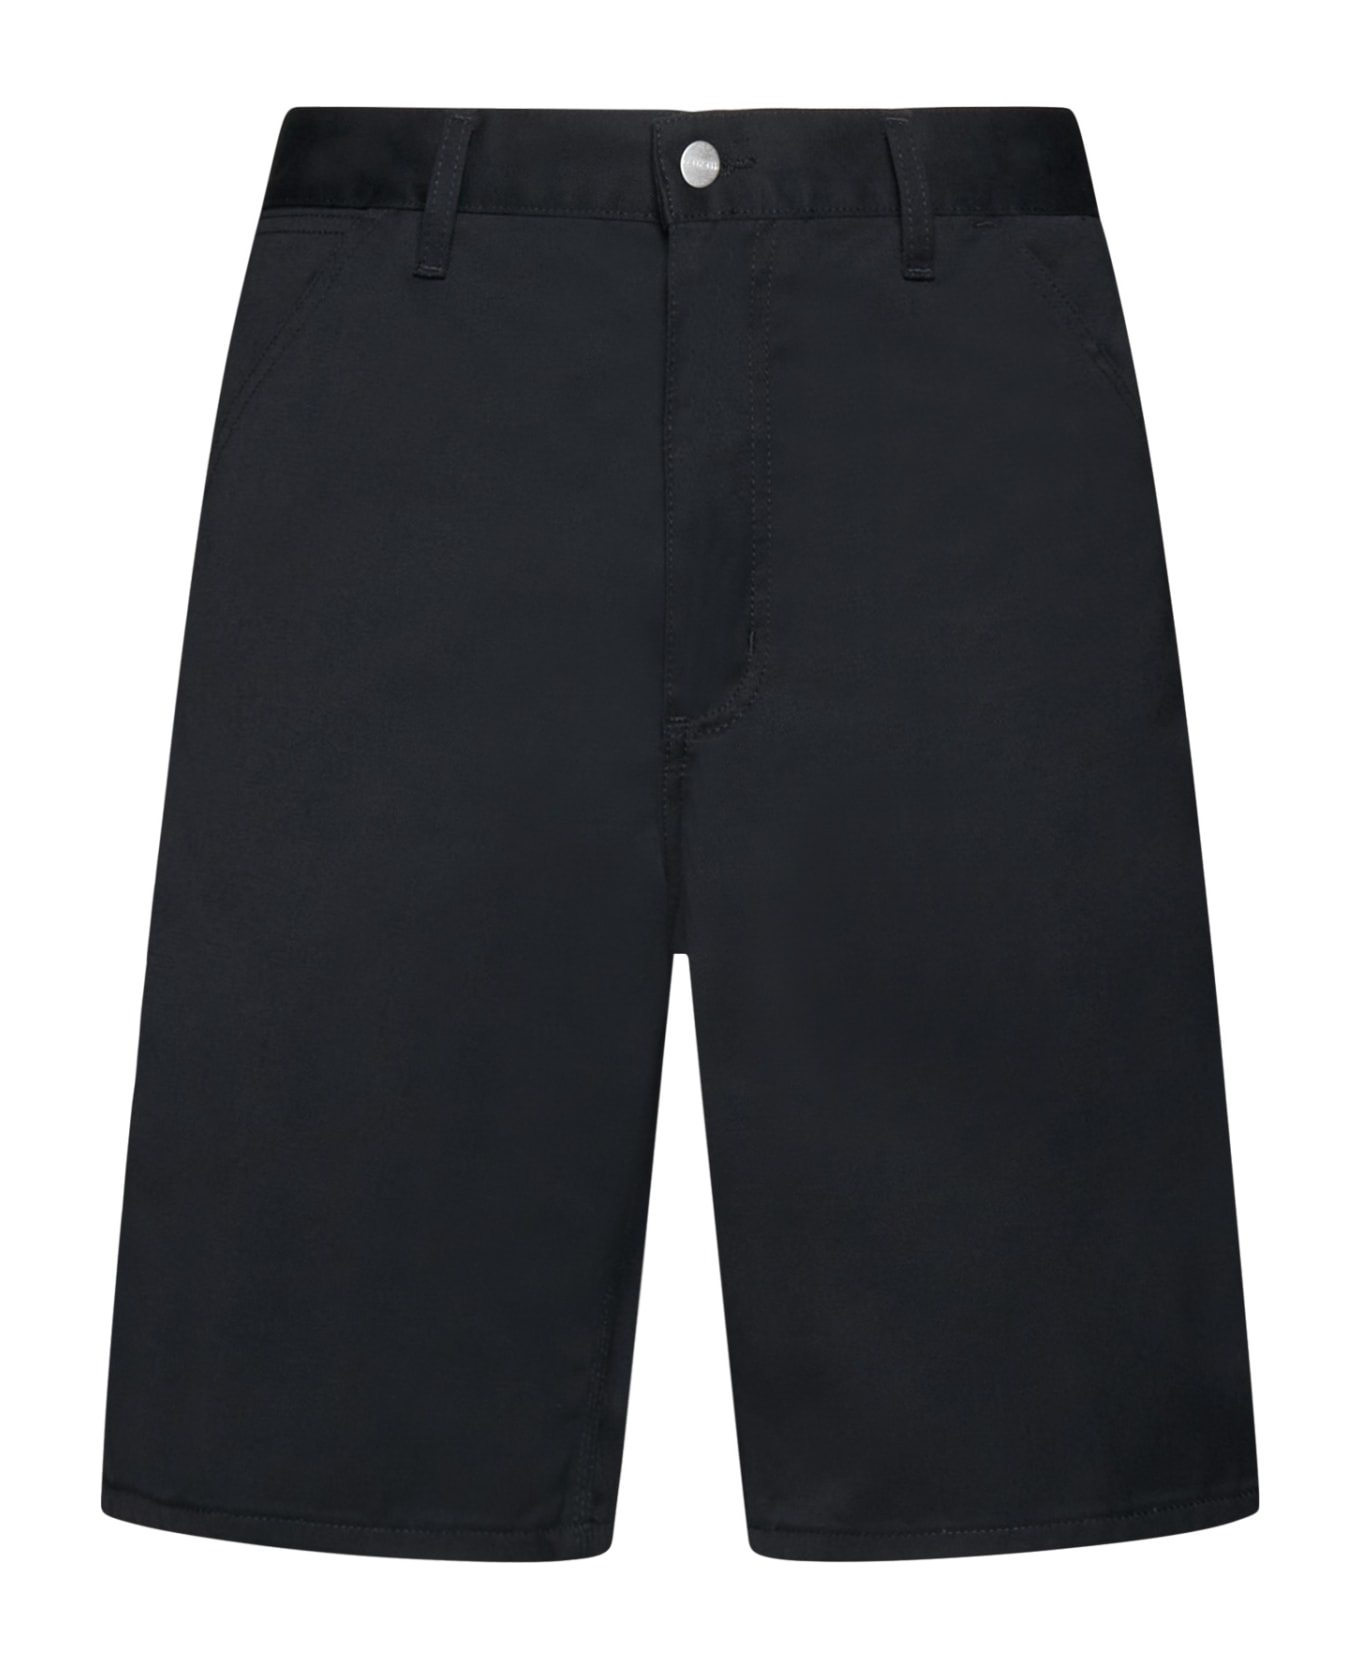 Carhartt Shorts - Black